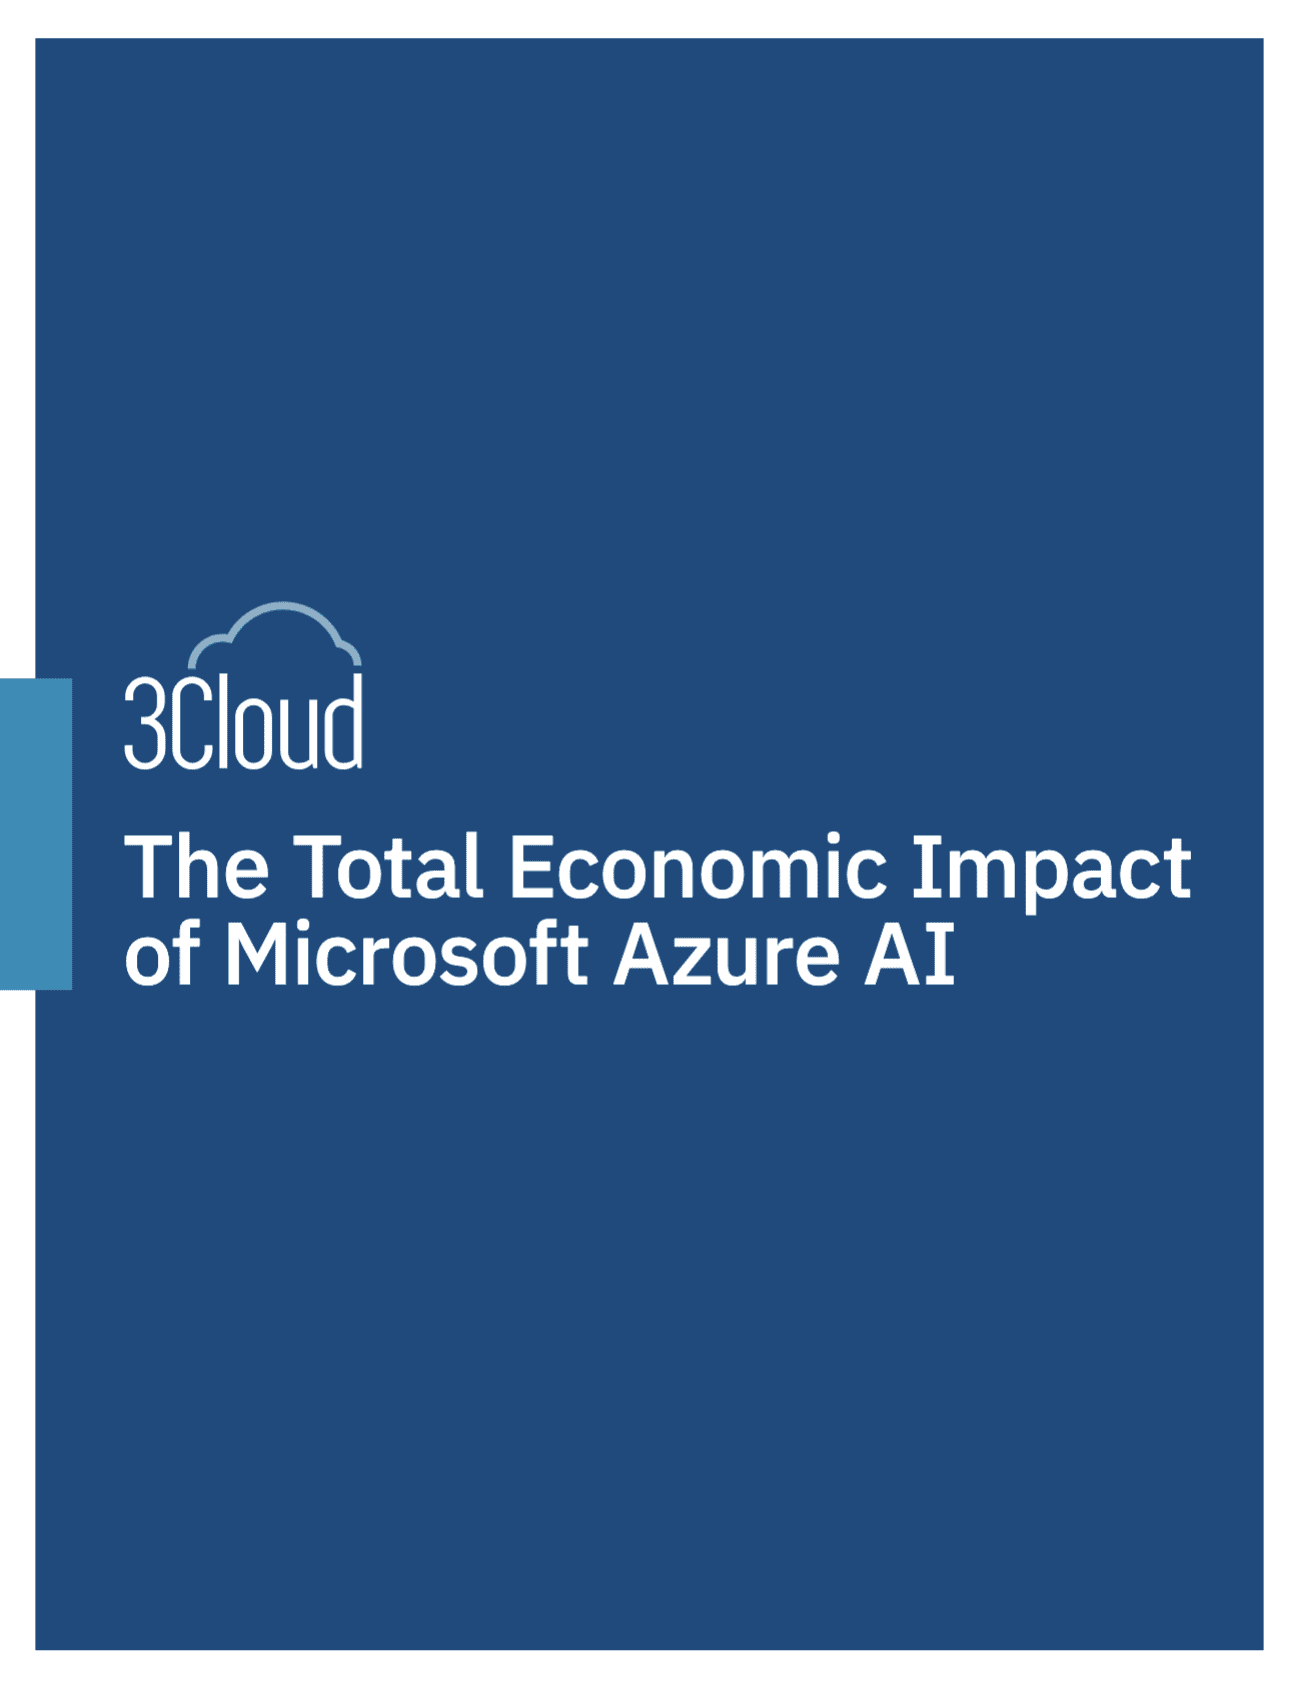 Economic Impact of Microsoft Azure AI